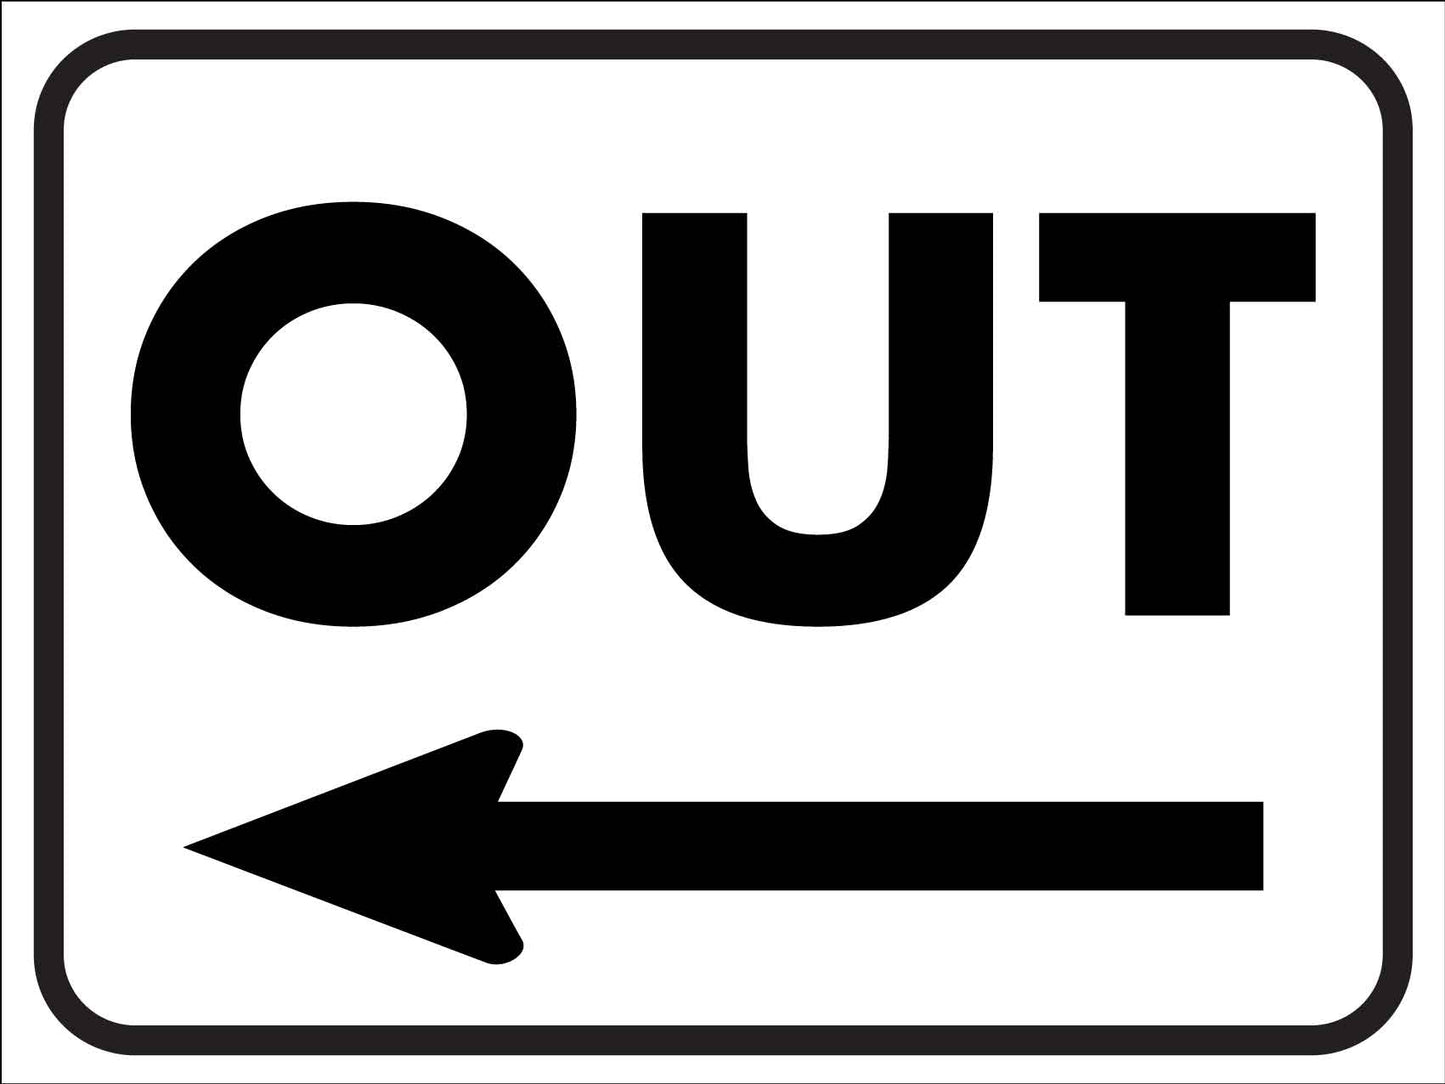 Out (Left Arrow) Sign